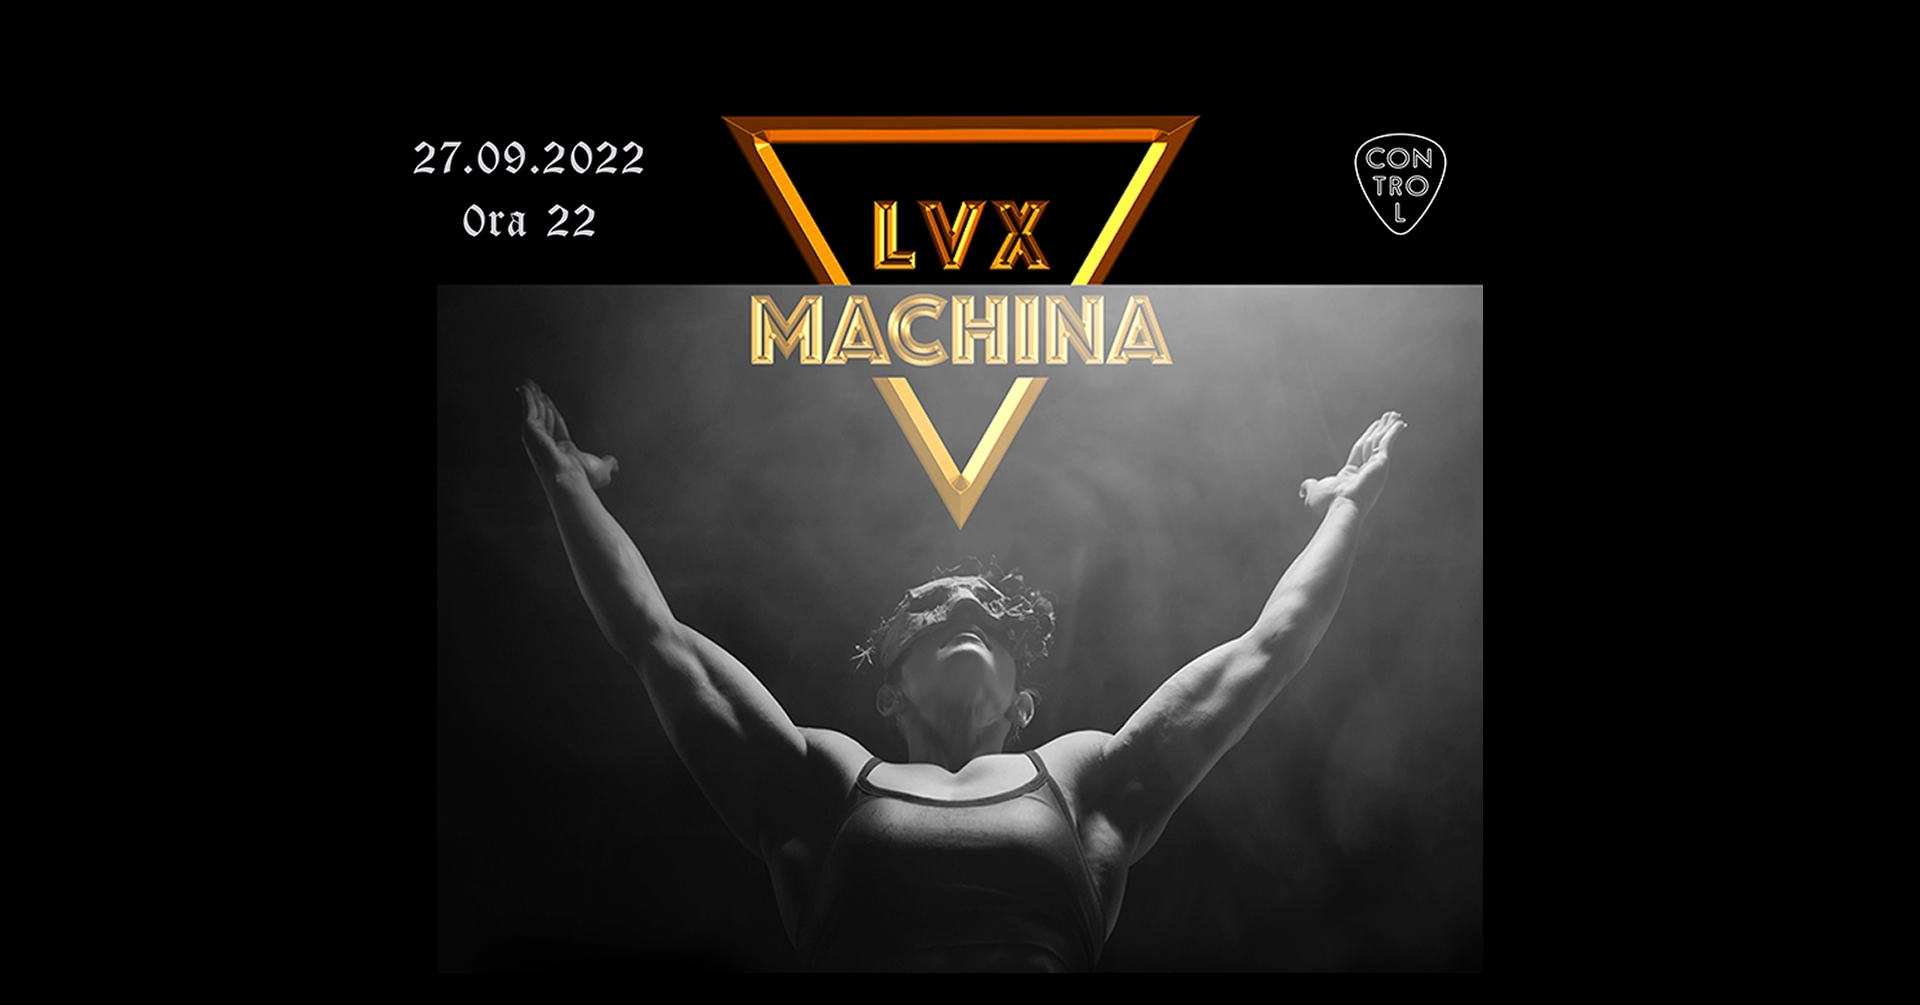 LVX Machina